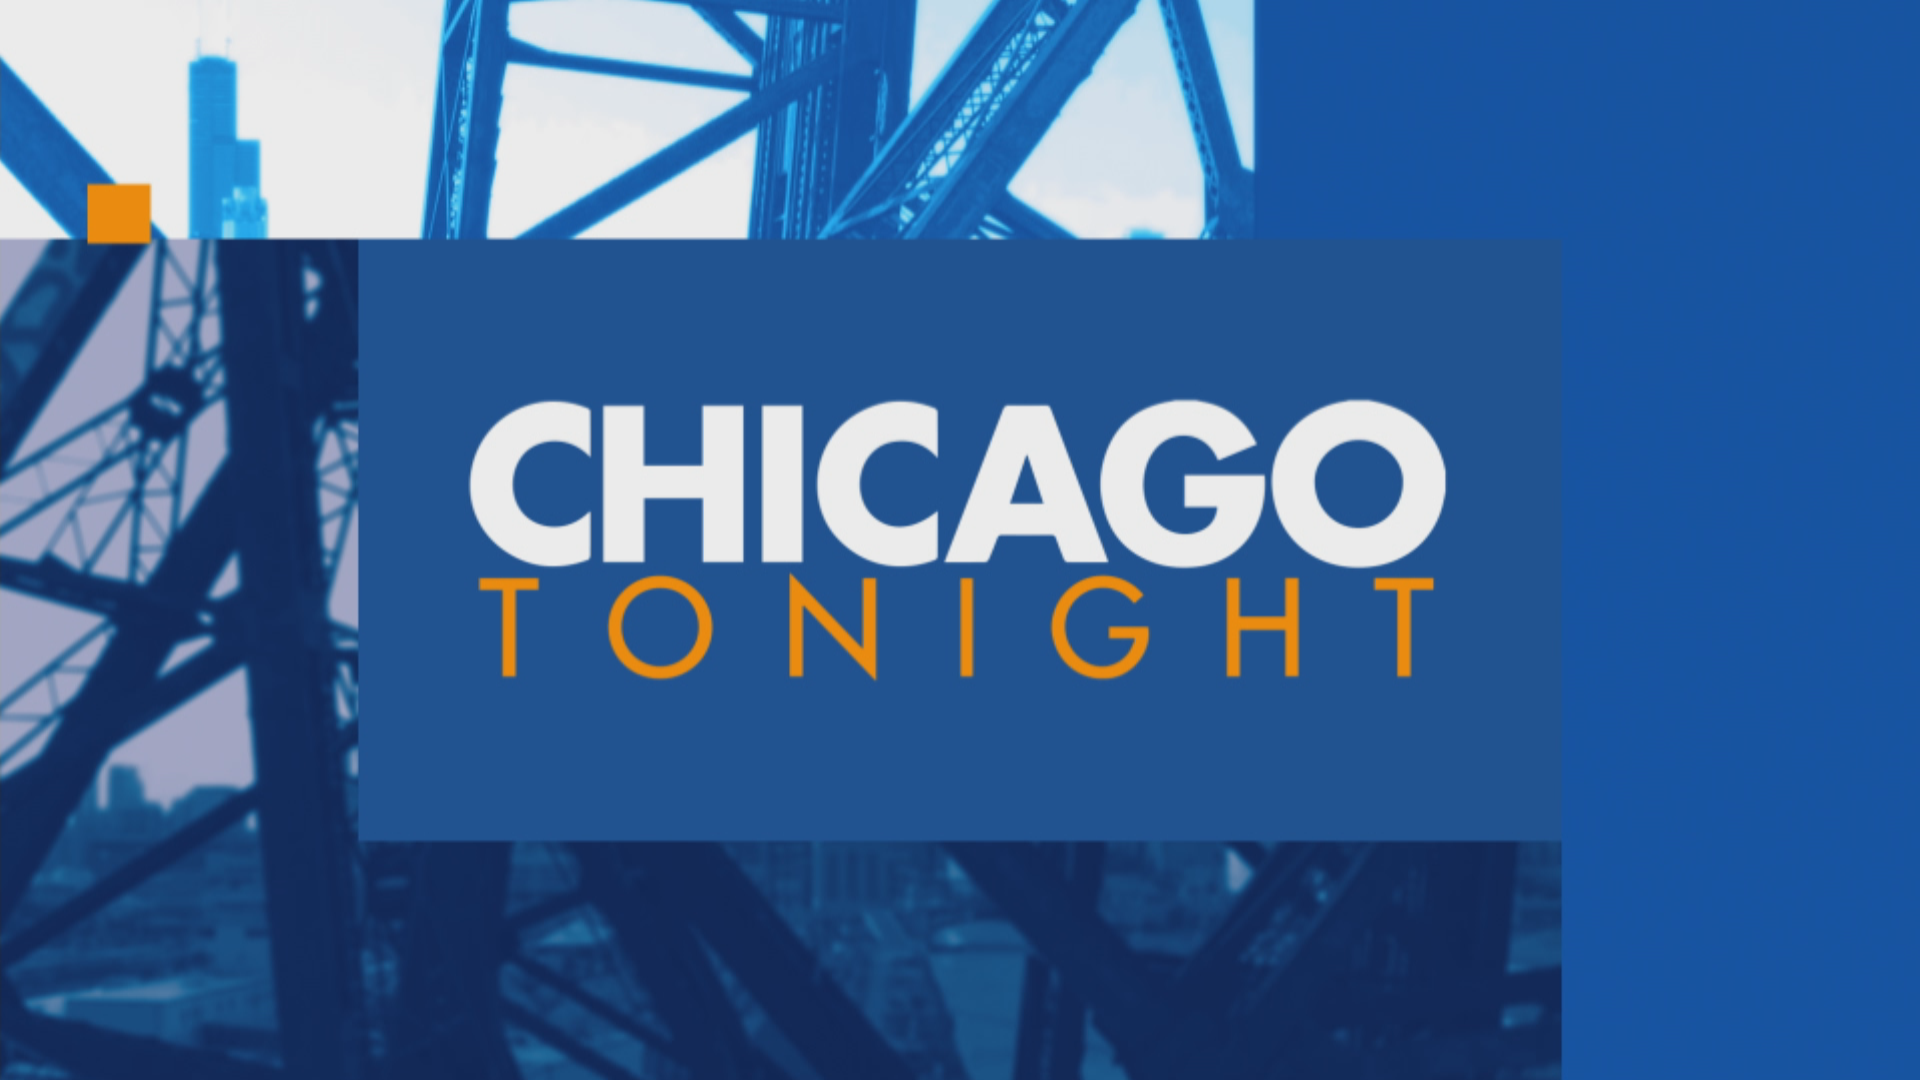 Chicago Tonight, Jan. 3, 2023 - Full Show, Season 2023